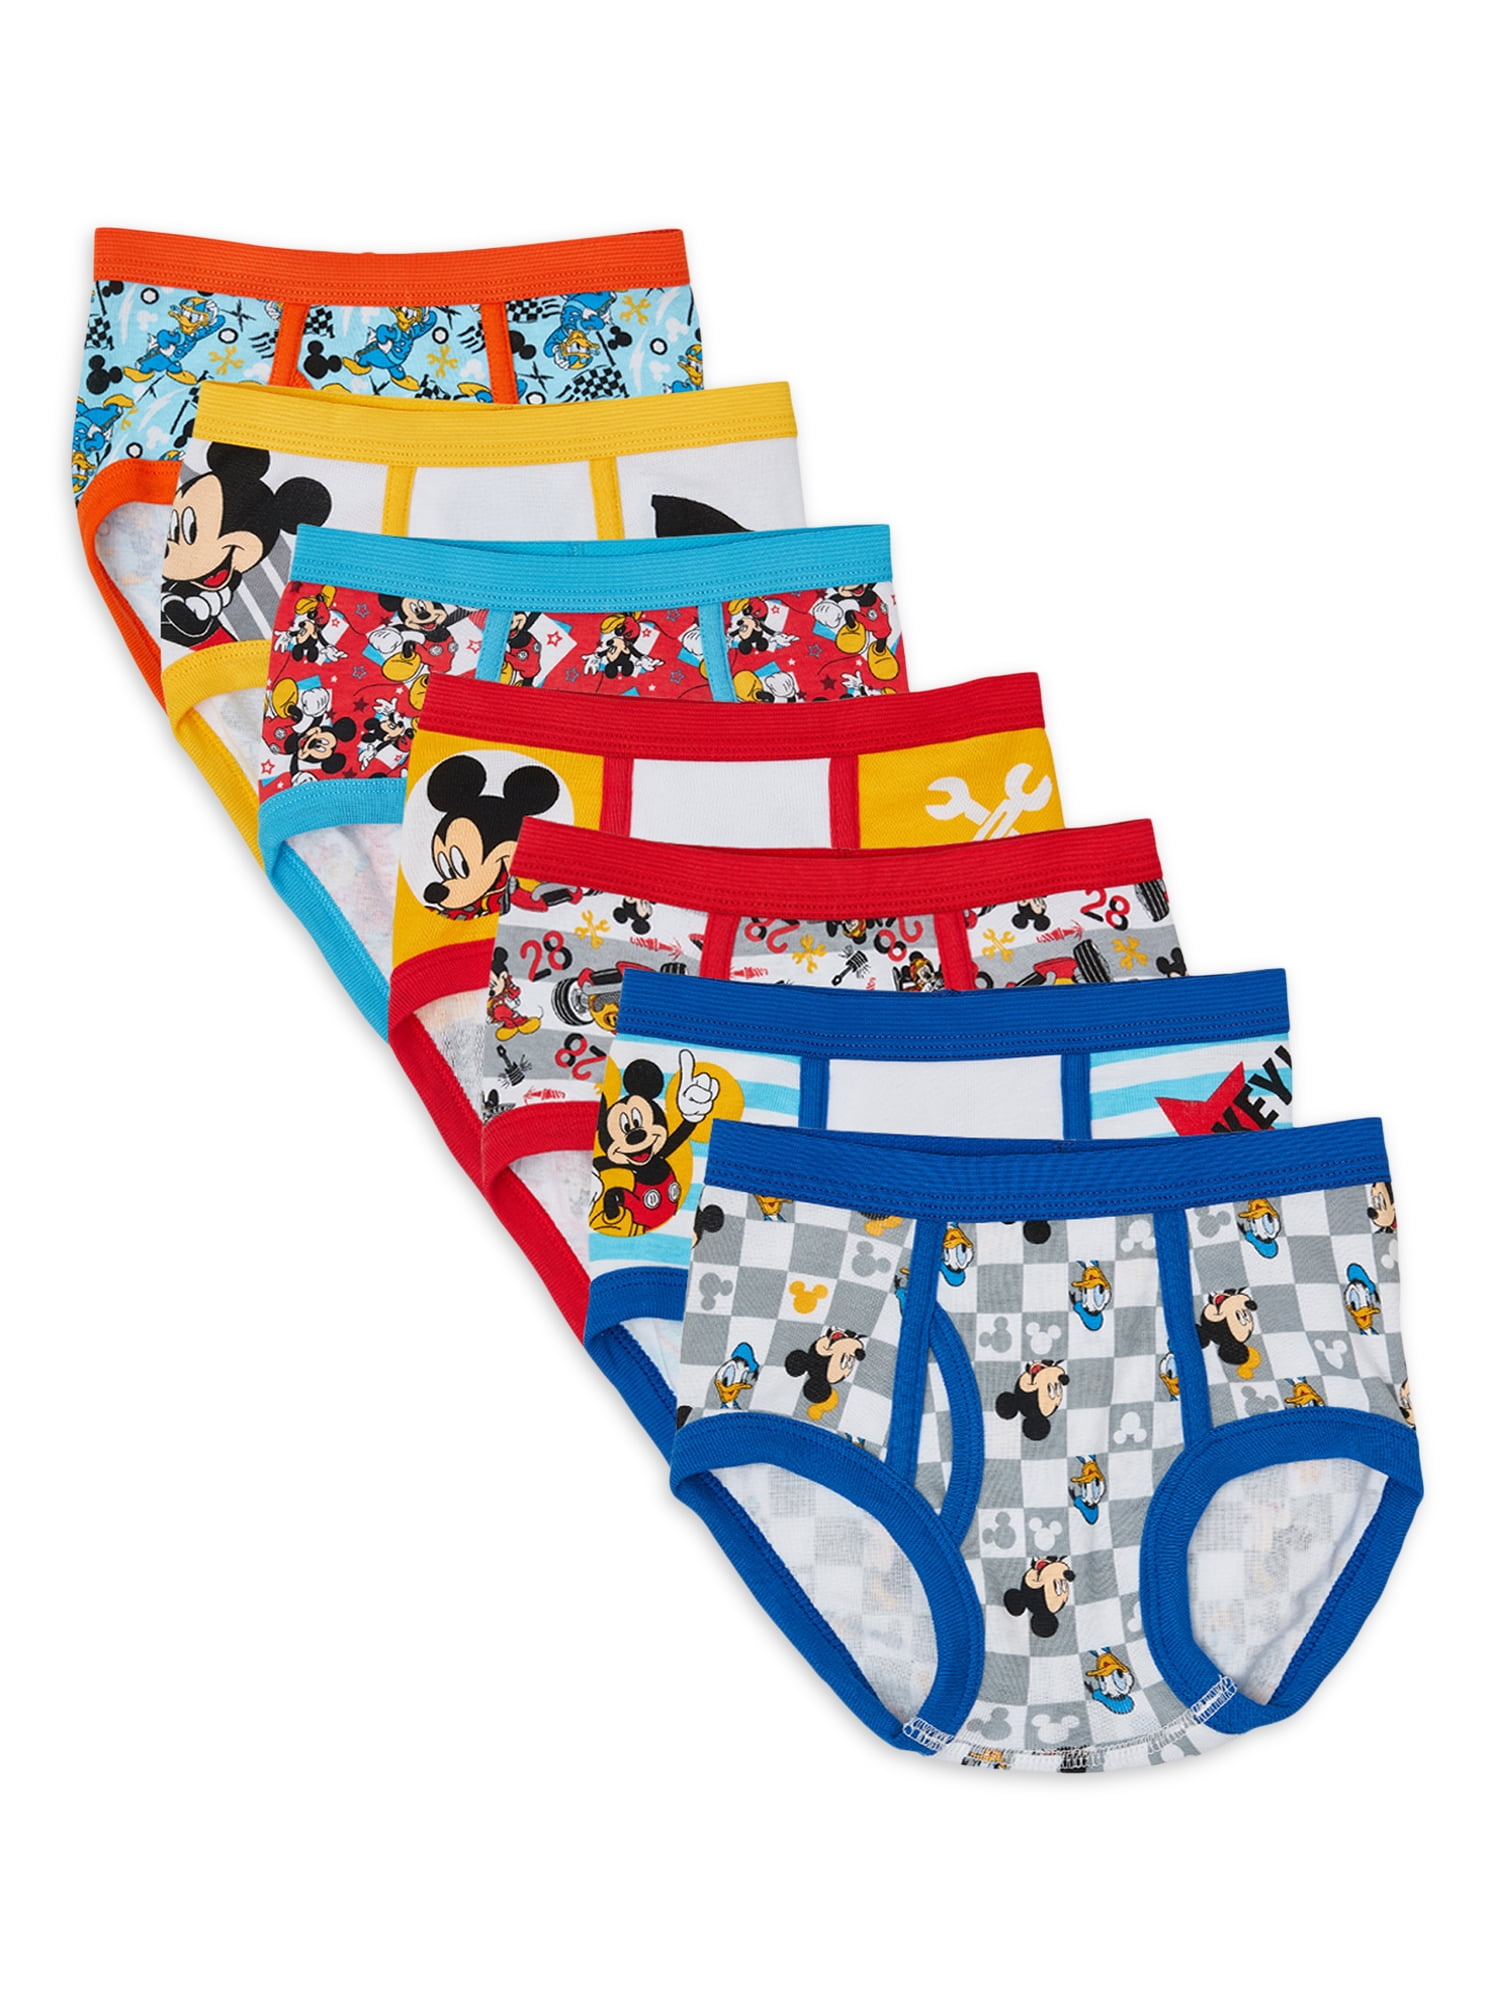 Boys 3T Training Pants 6Pk Disney Mickey Mouse Toddler Underwear Briefs NEW